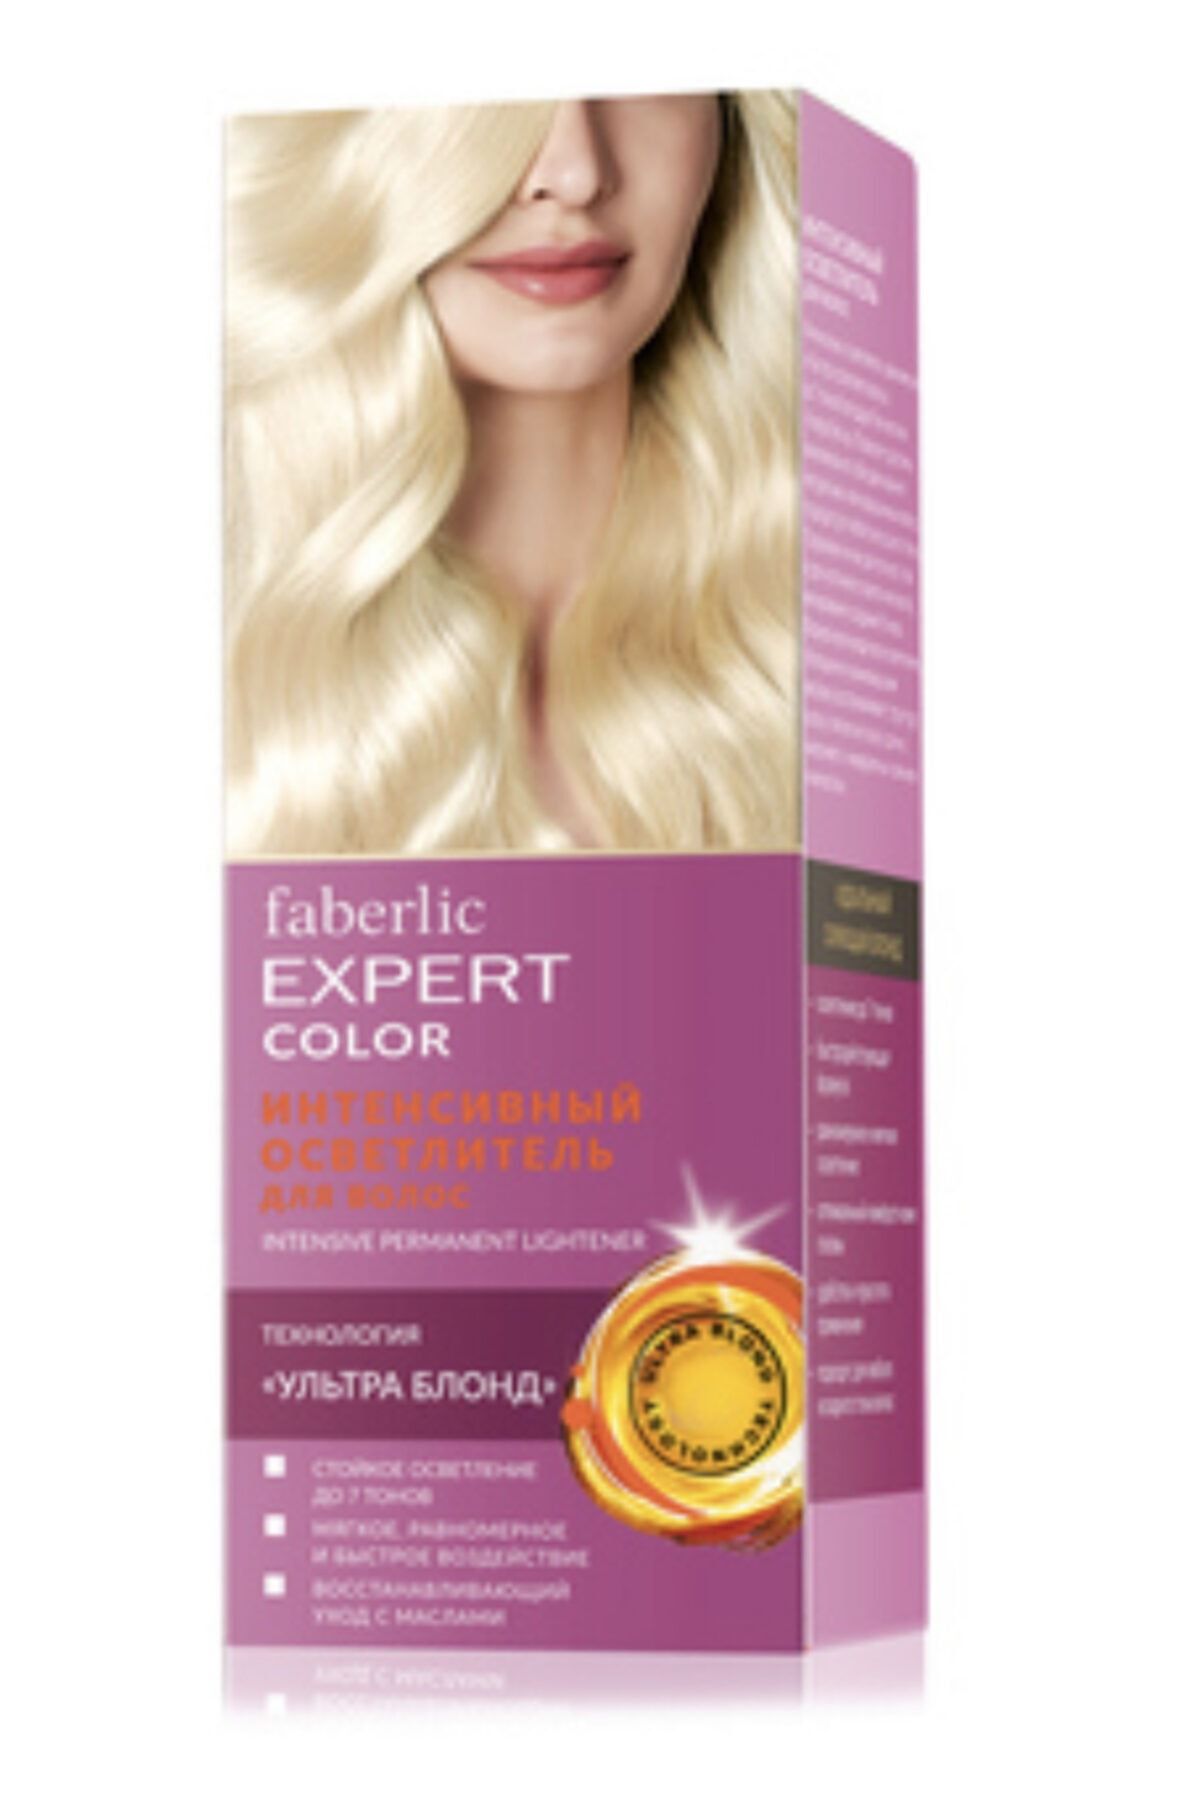 Faberlic Expert Color Yoğun Renk Açıcı